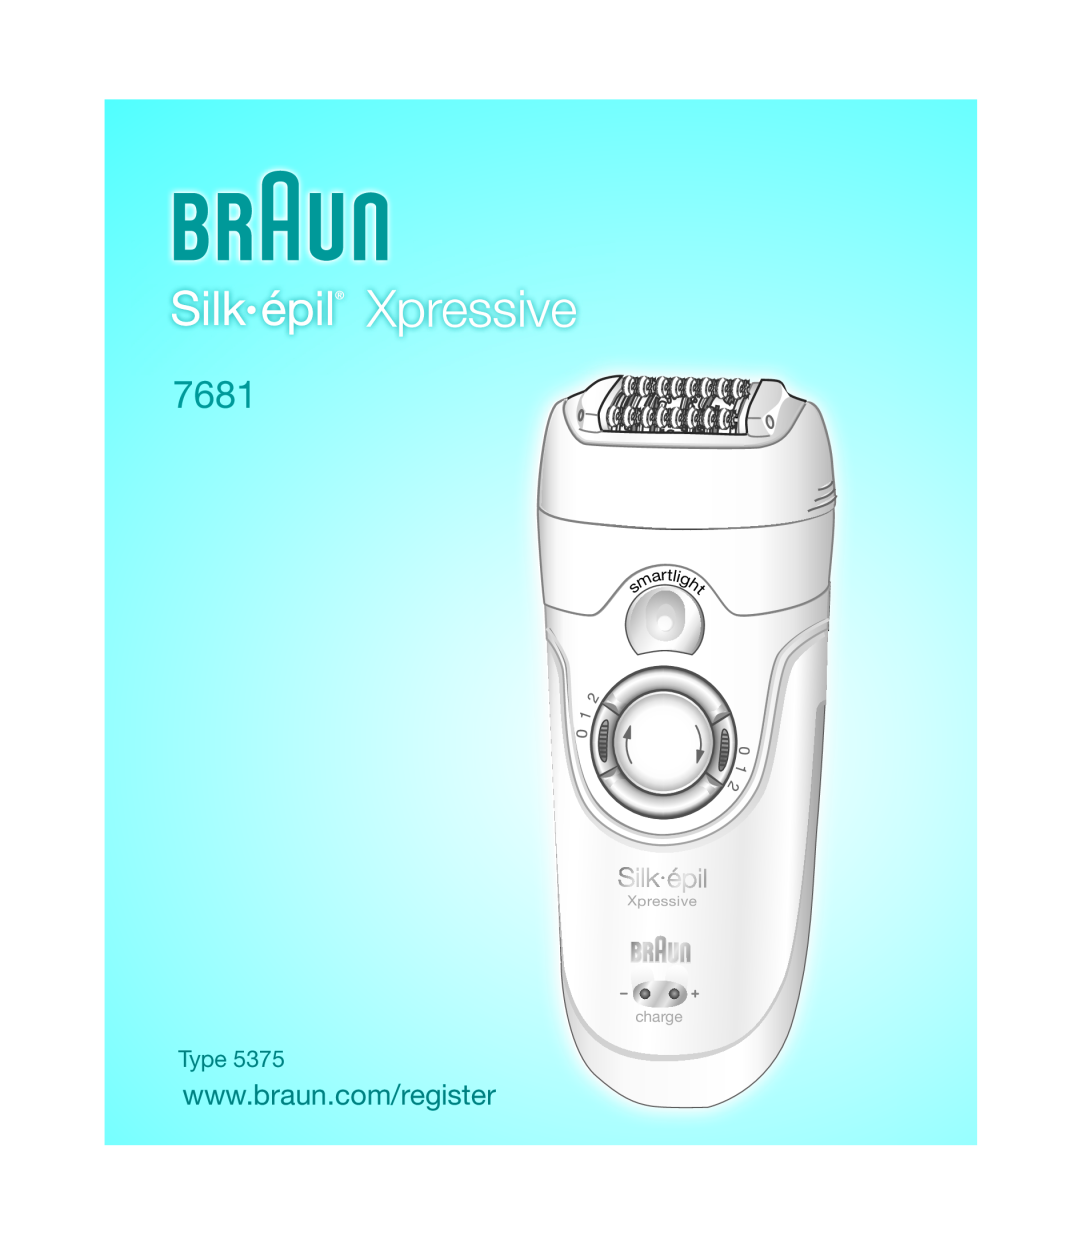 Braun 5375 manual Silk épil Xpressive, 7681, Type, ar t li, charge 